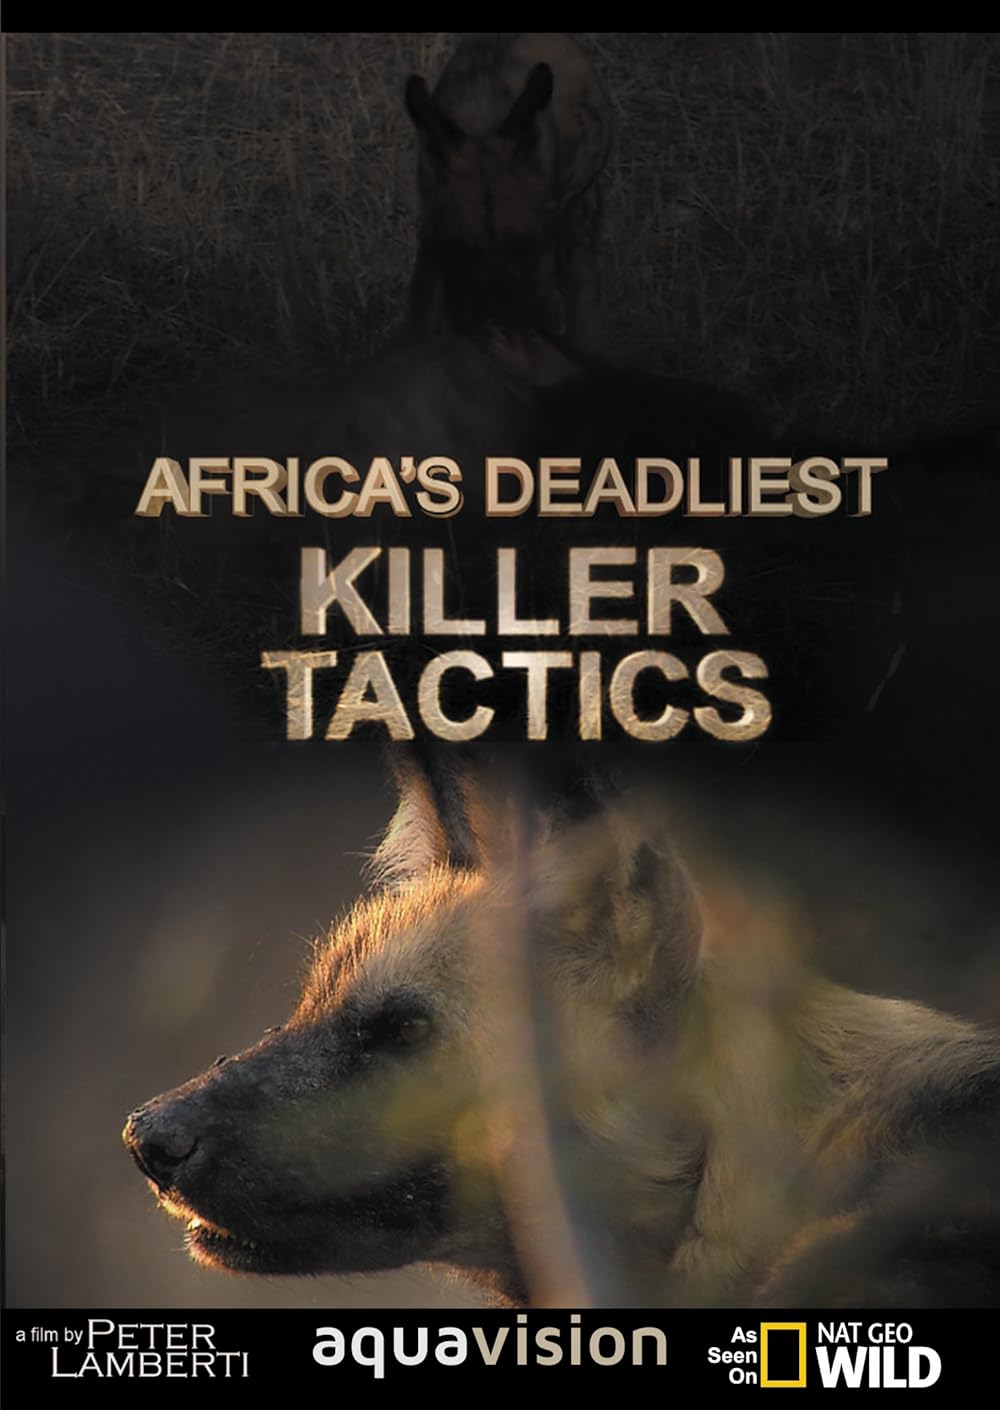 Africa's Deadliest (2020) S6 EP01&EP03 128Kbps 25Fps 48Khz 2.0Ch Disney+ DD+ E-AC3 Turkish Audio TAC